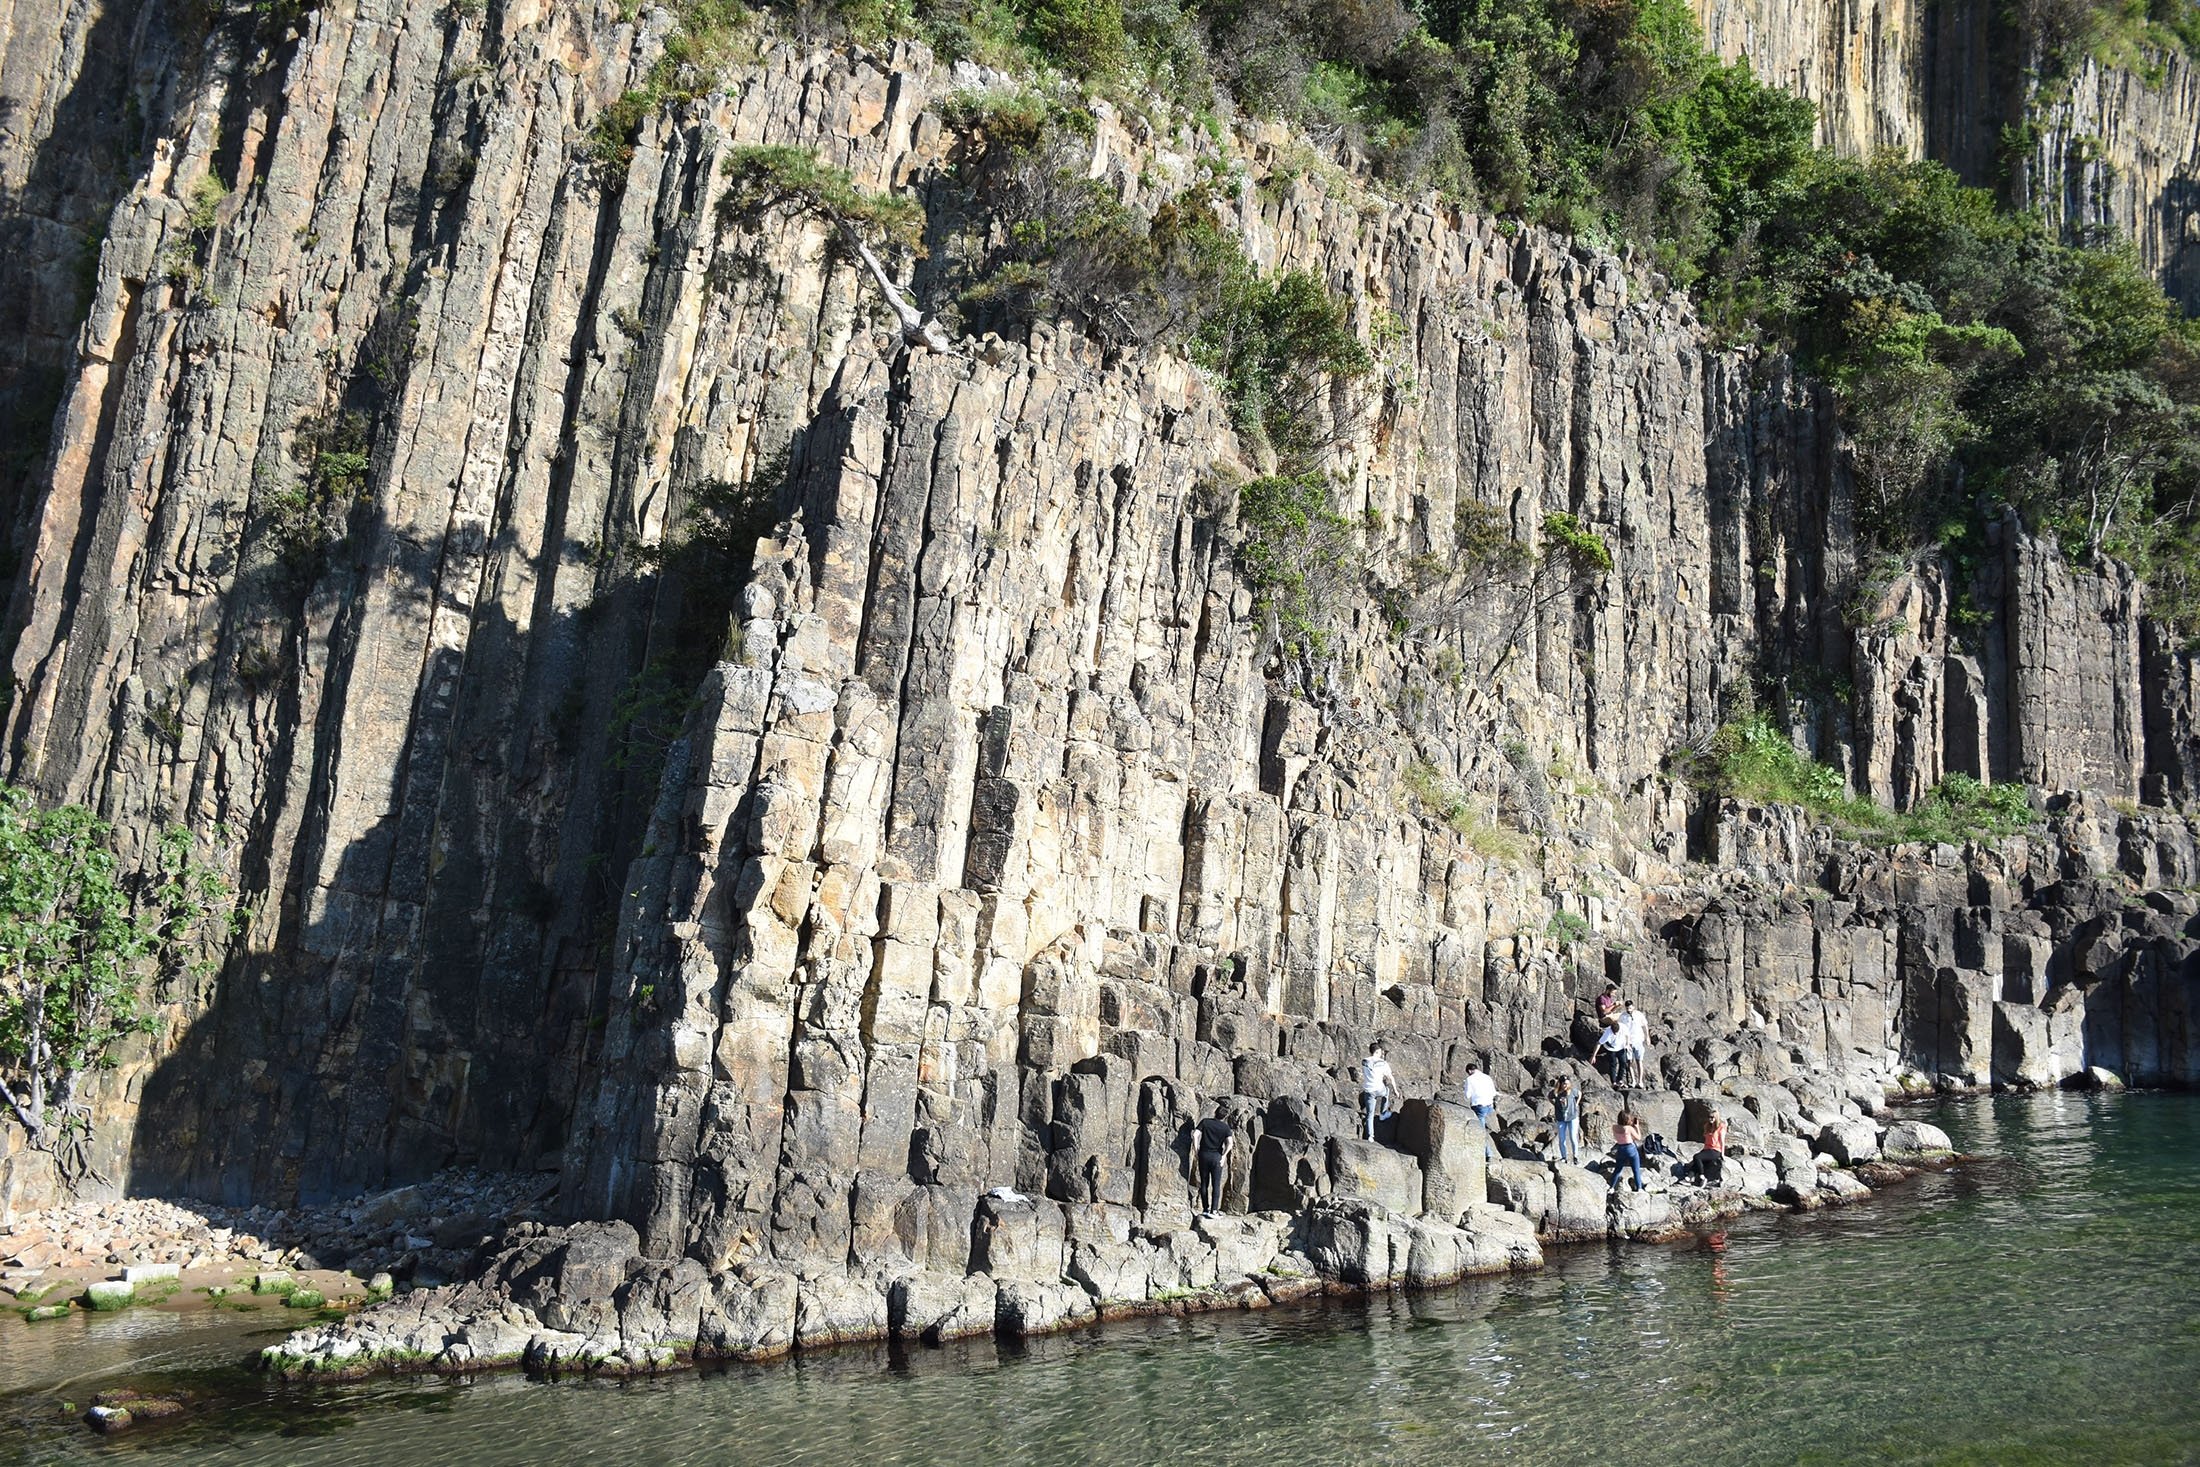 Northern Turkey's prehistoric lava columns leave visitors breathless